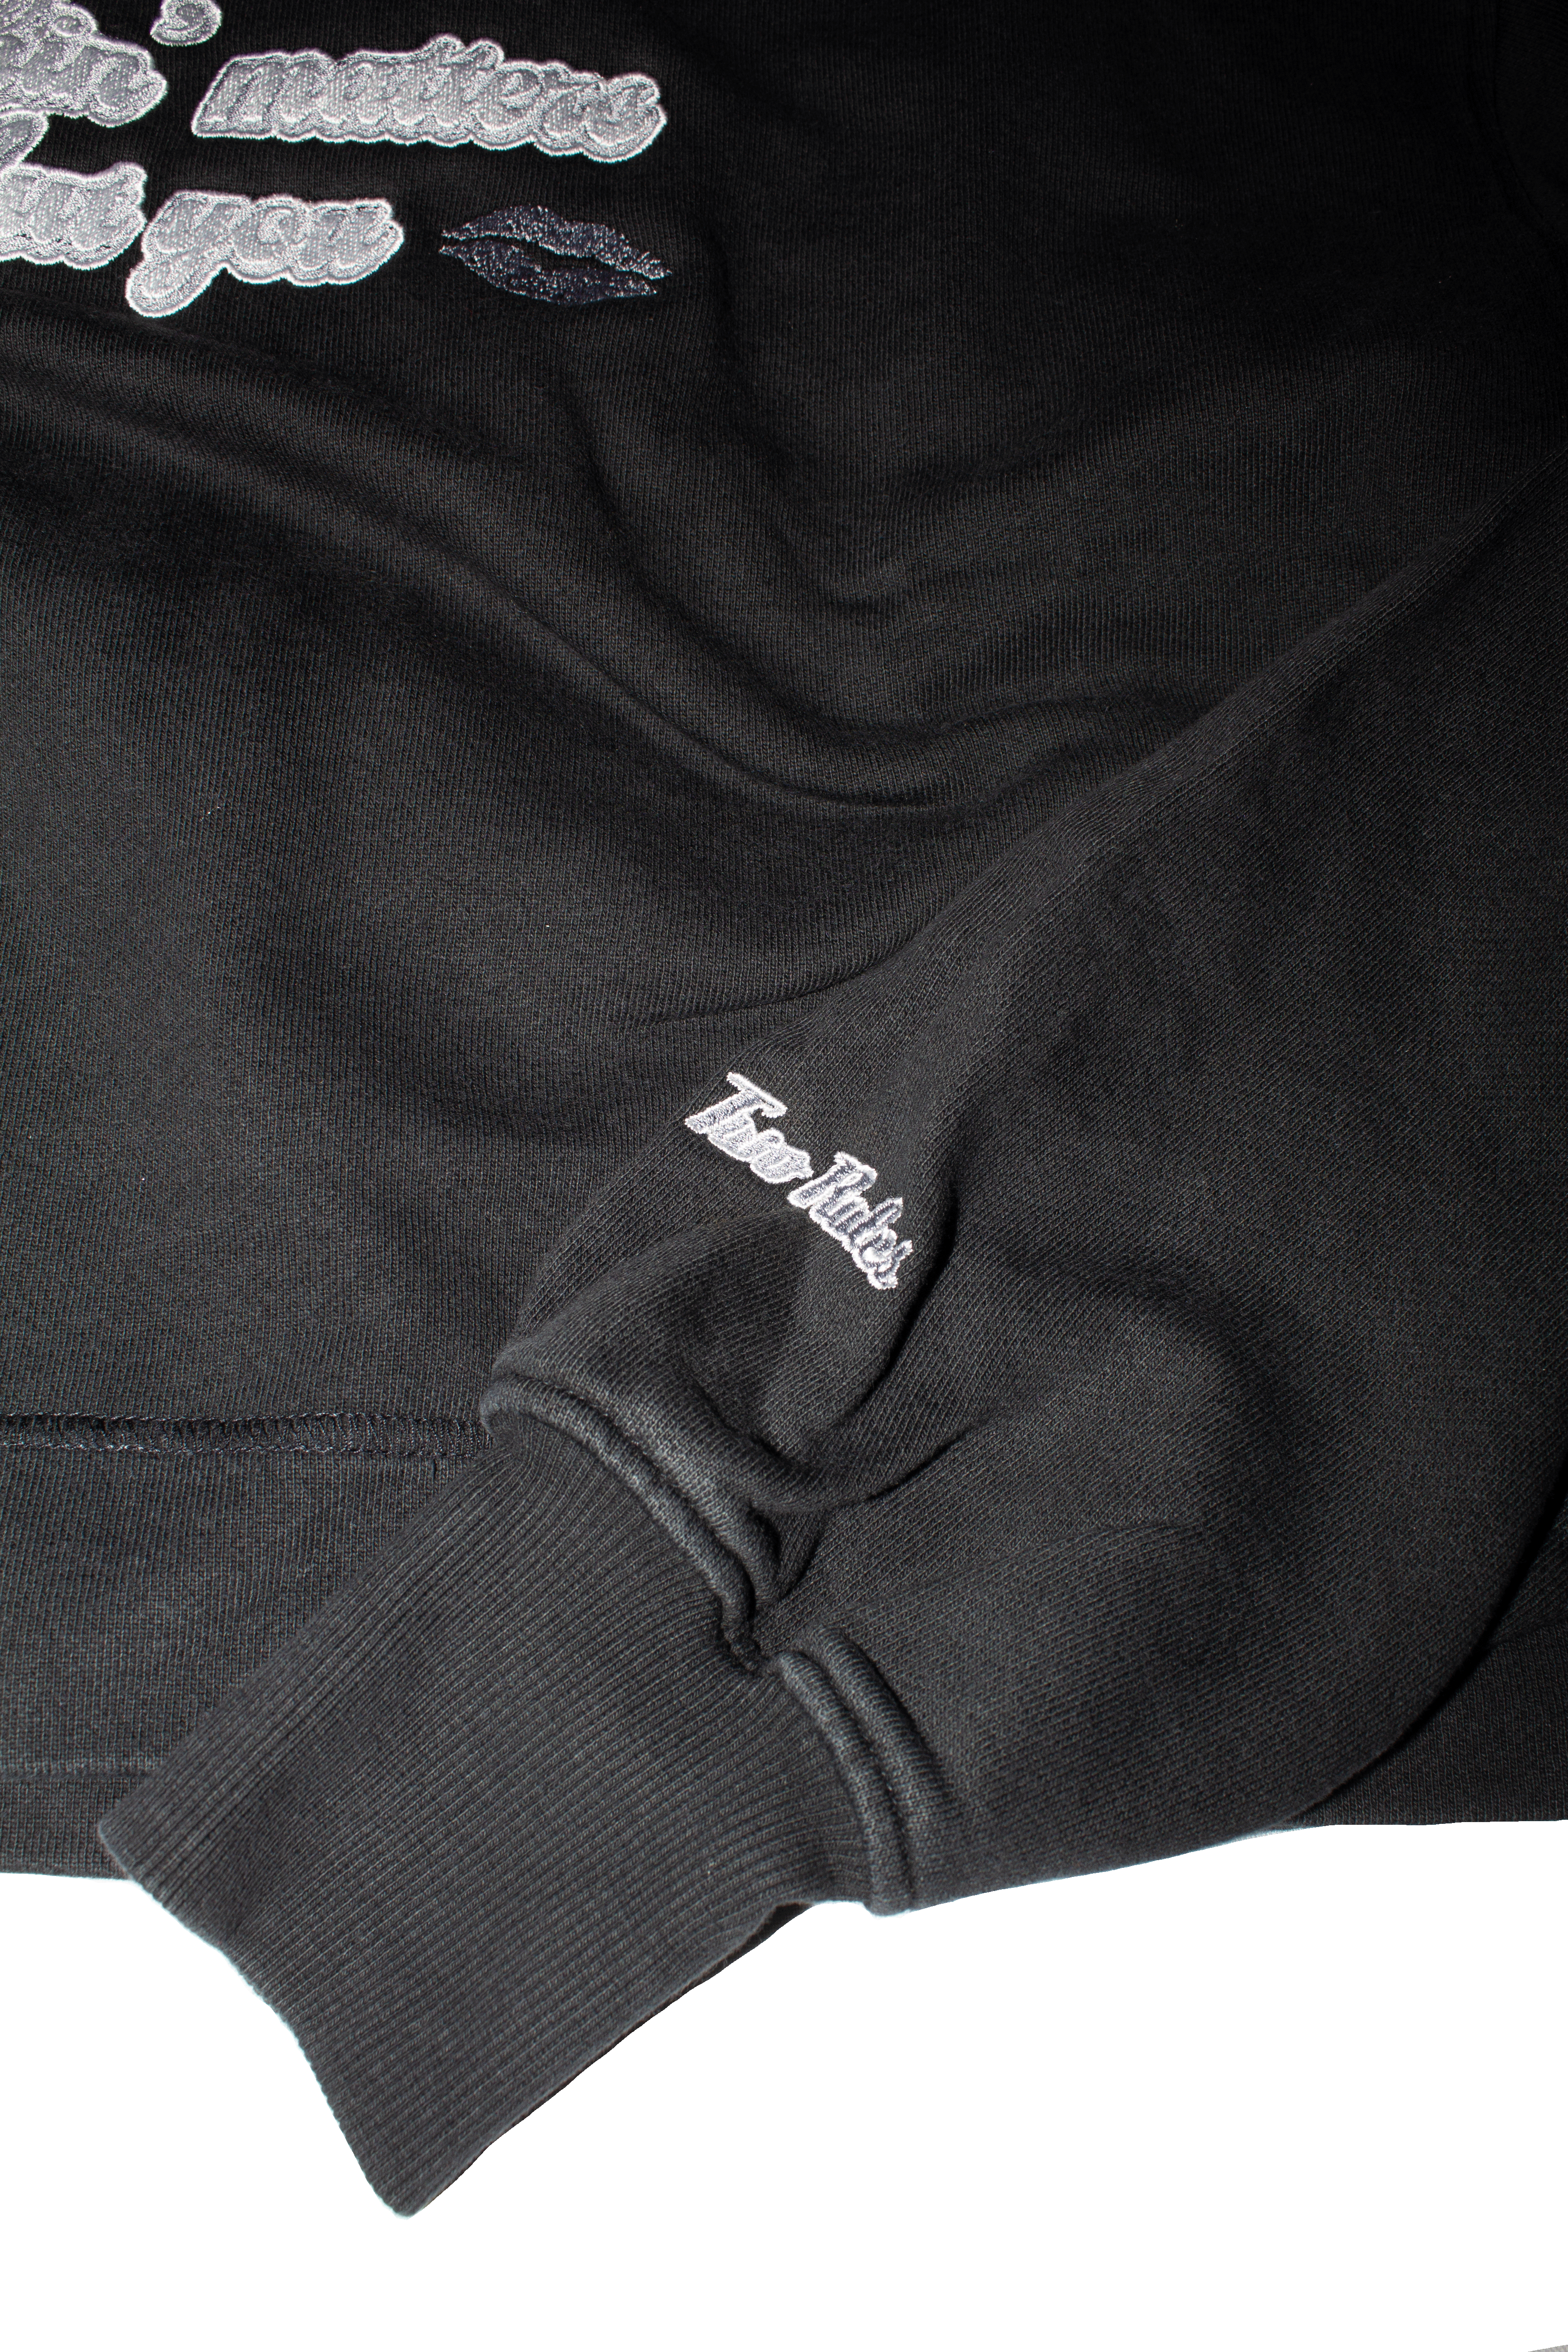 Oversized cropped hoody - "Kisses" Washed Black